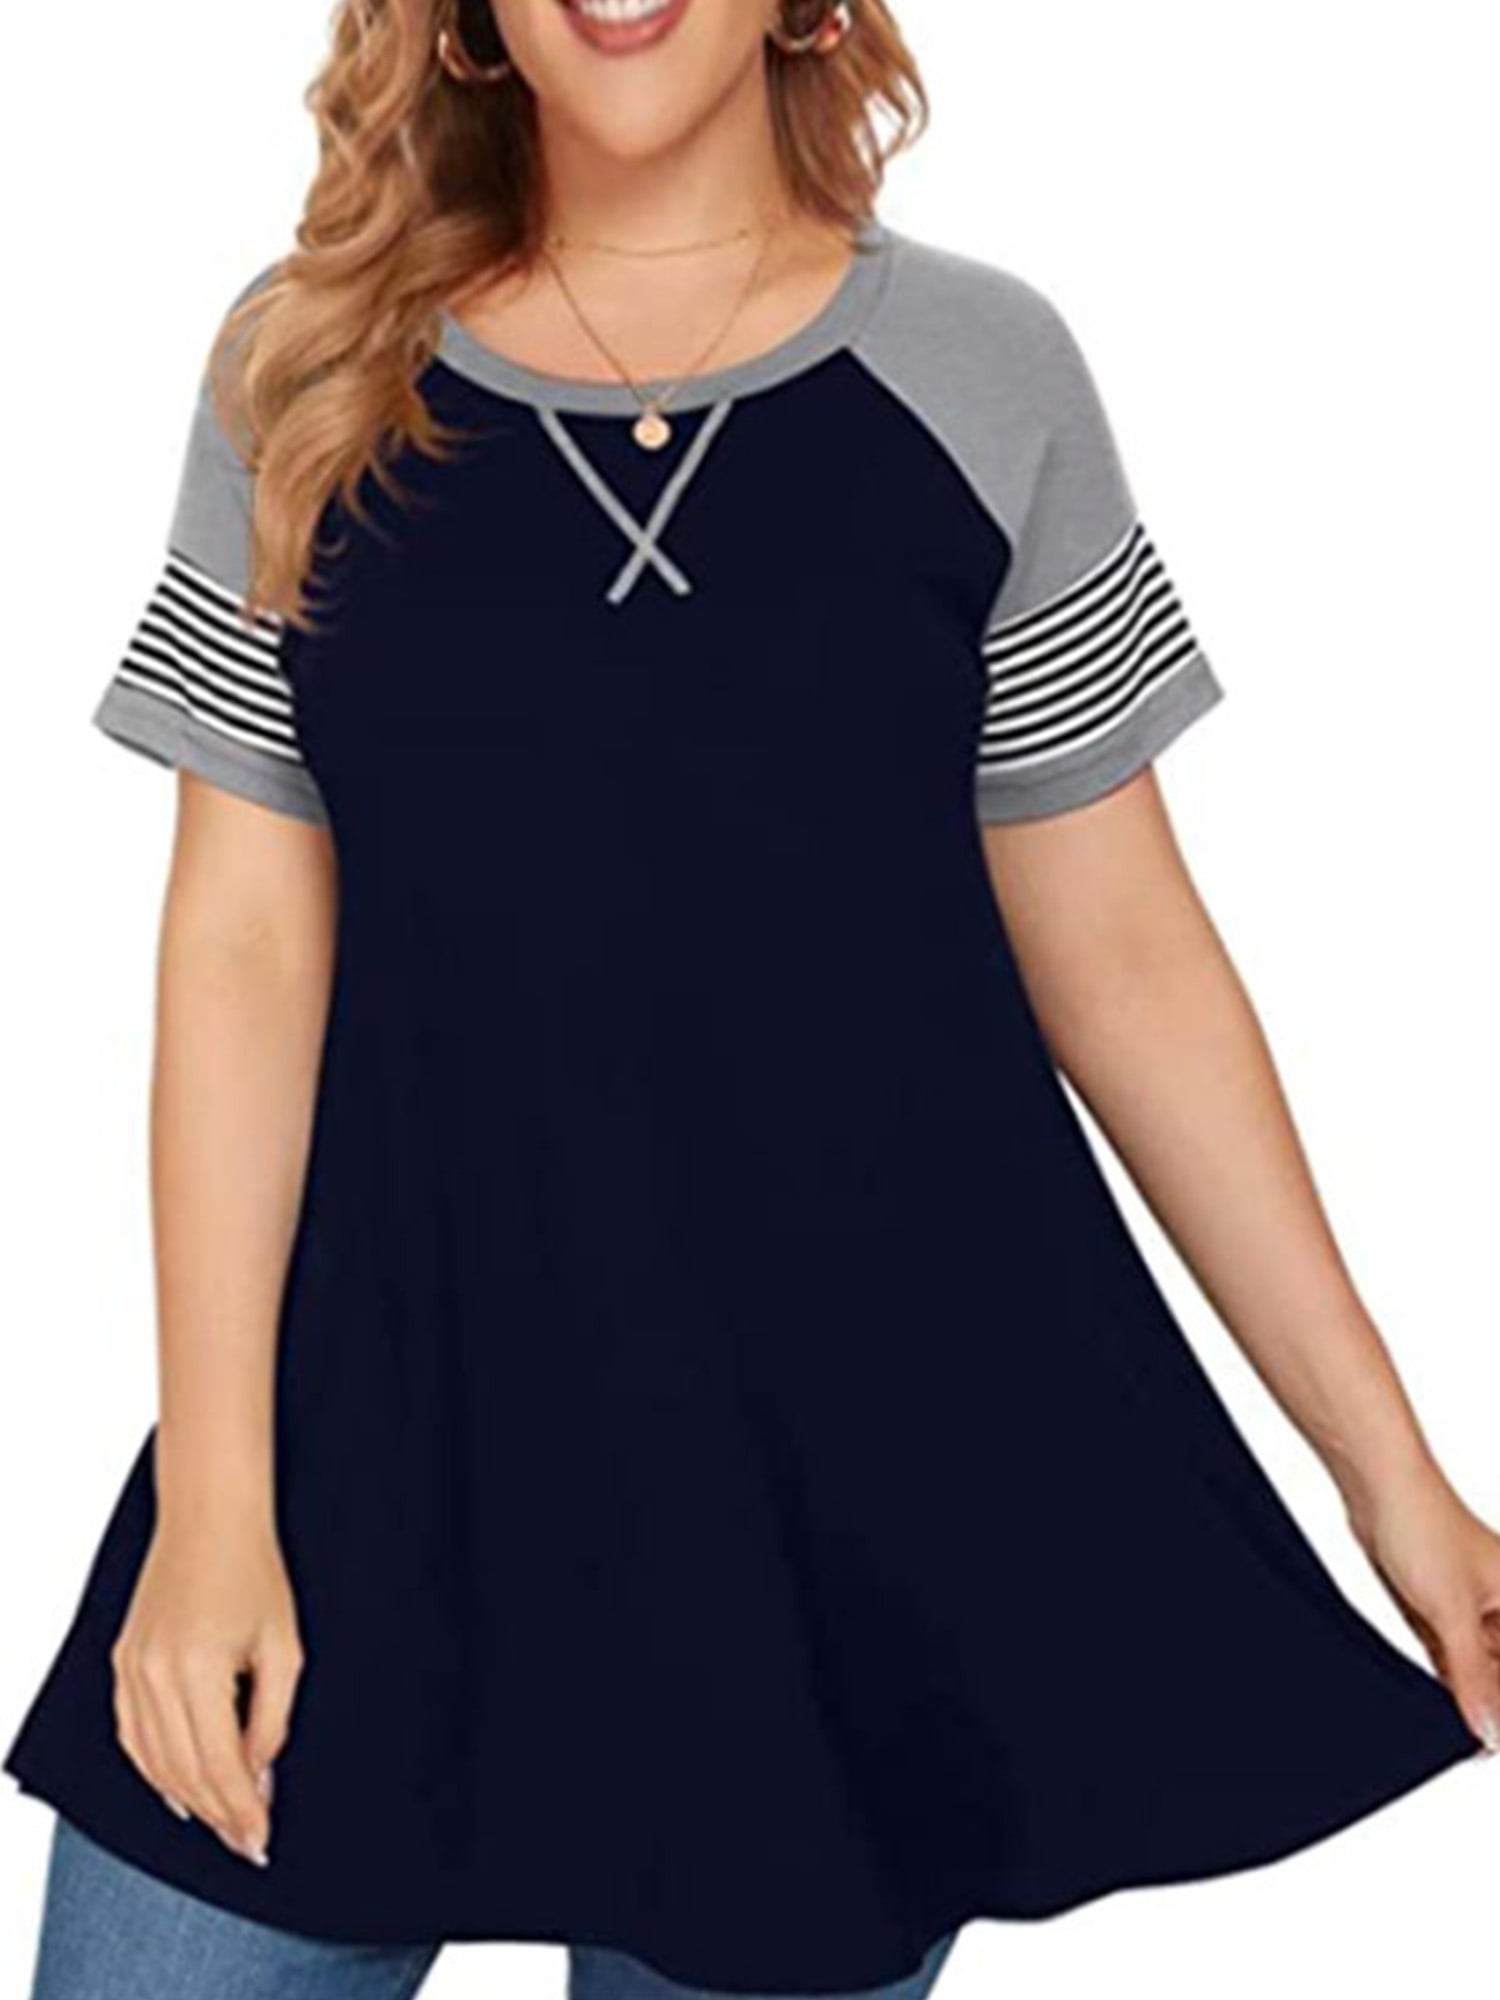 Women Plus Size Casual Shirt Striped Color Block Blouse Tops Short Sleeve Tunics 